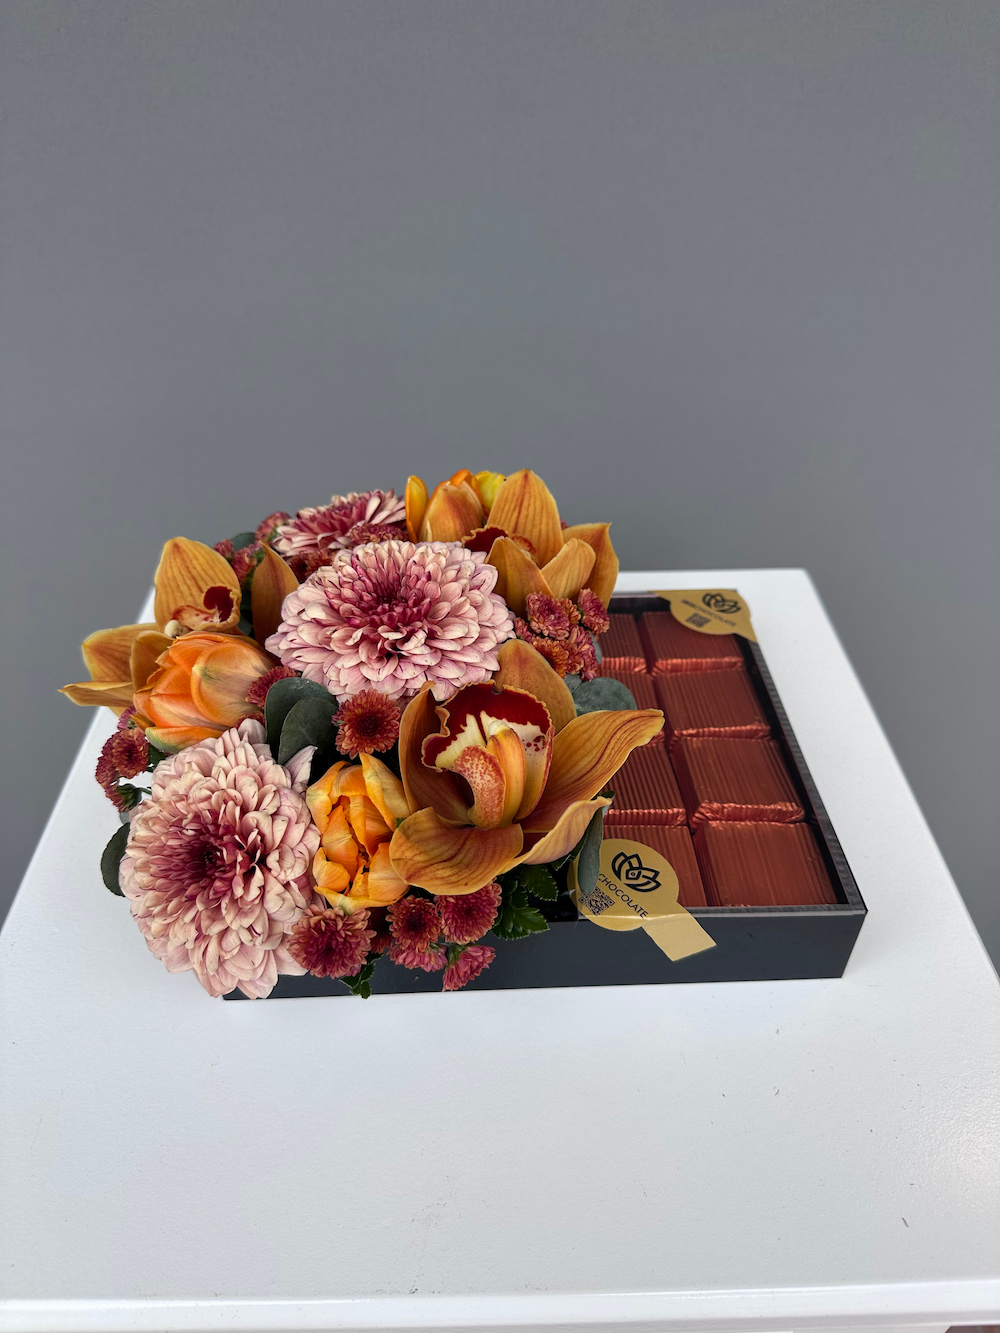 Choccobeer Çikolata Çiçek